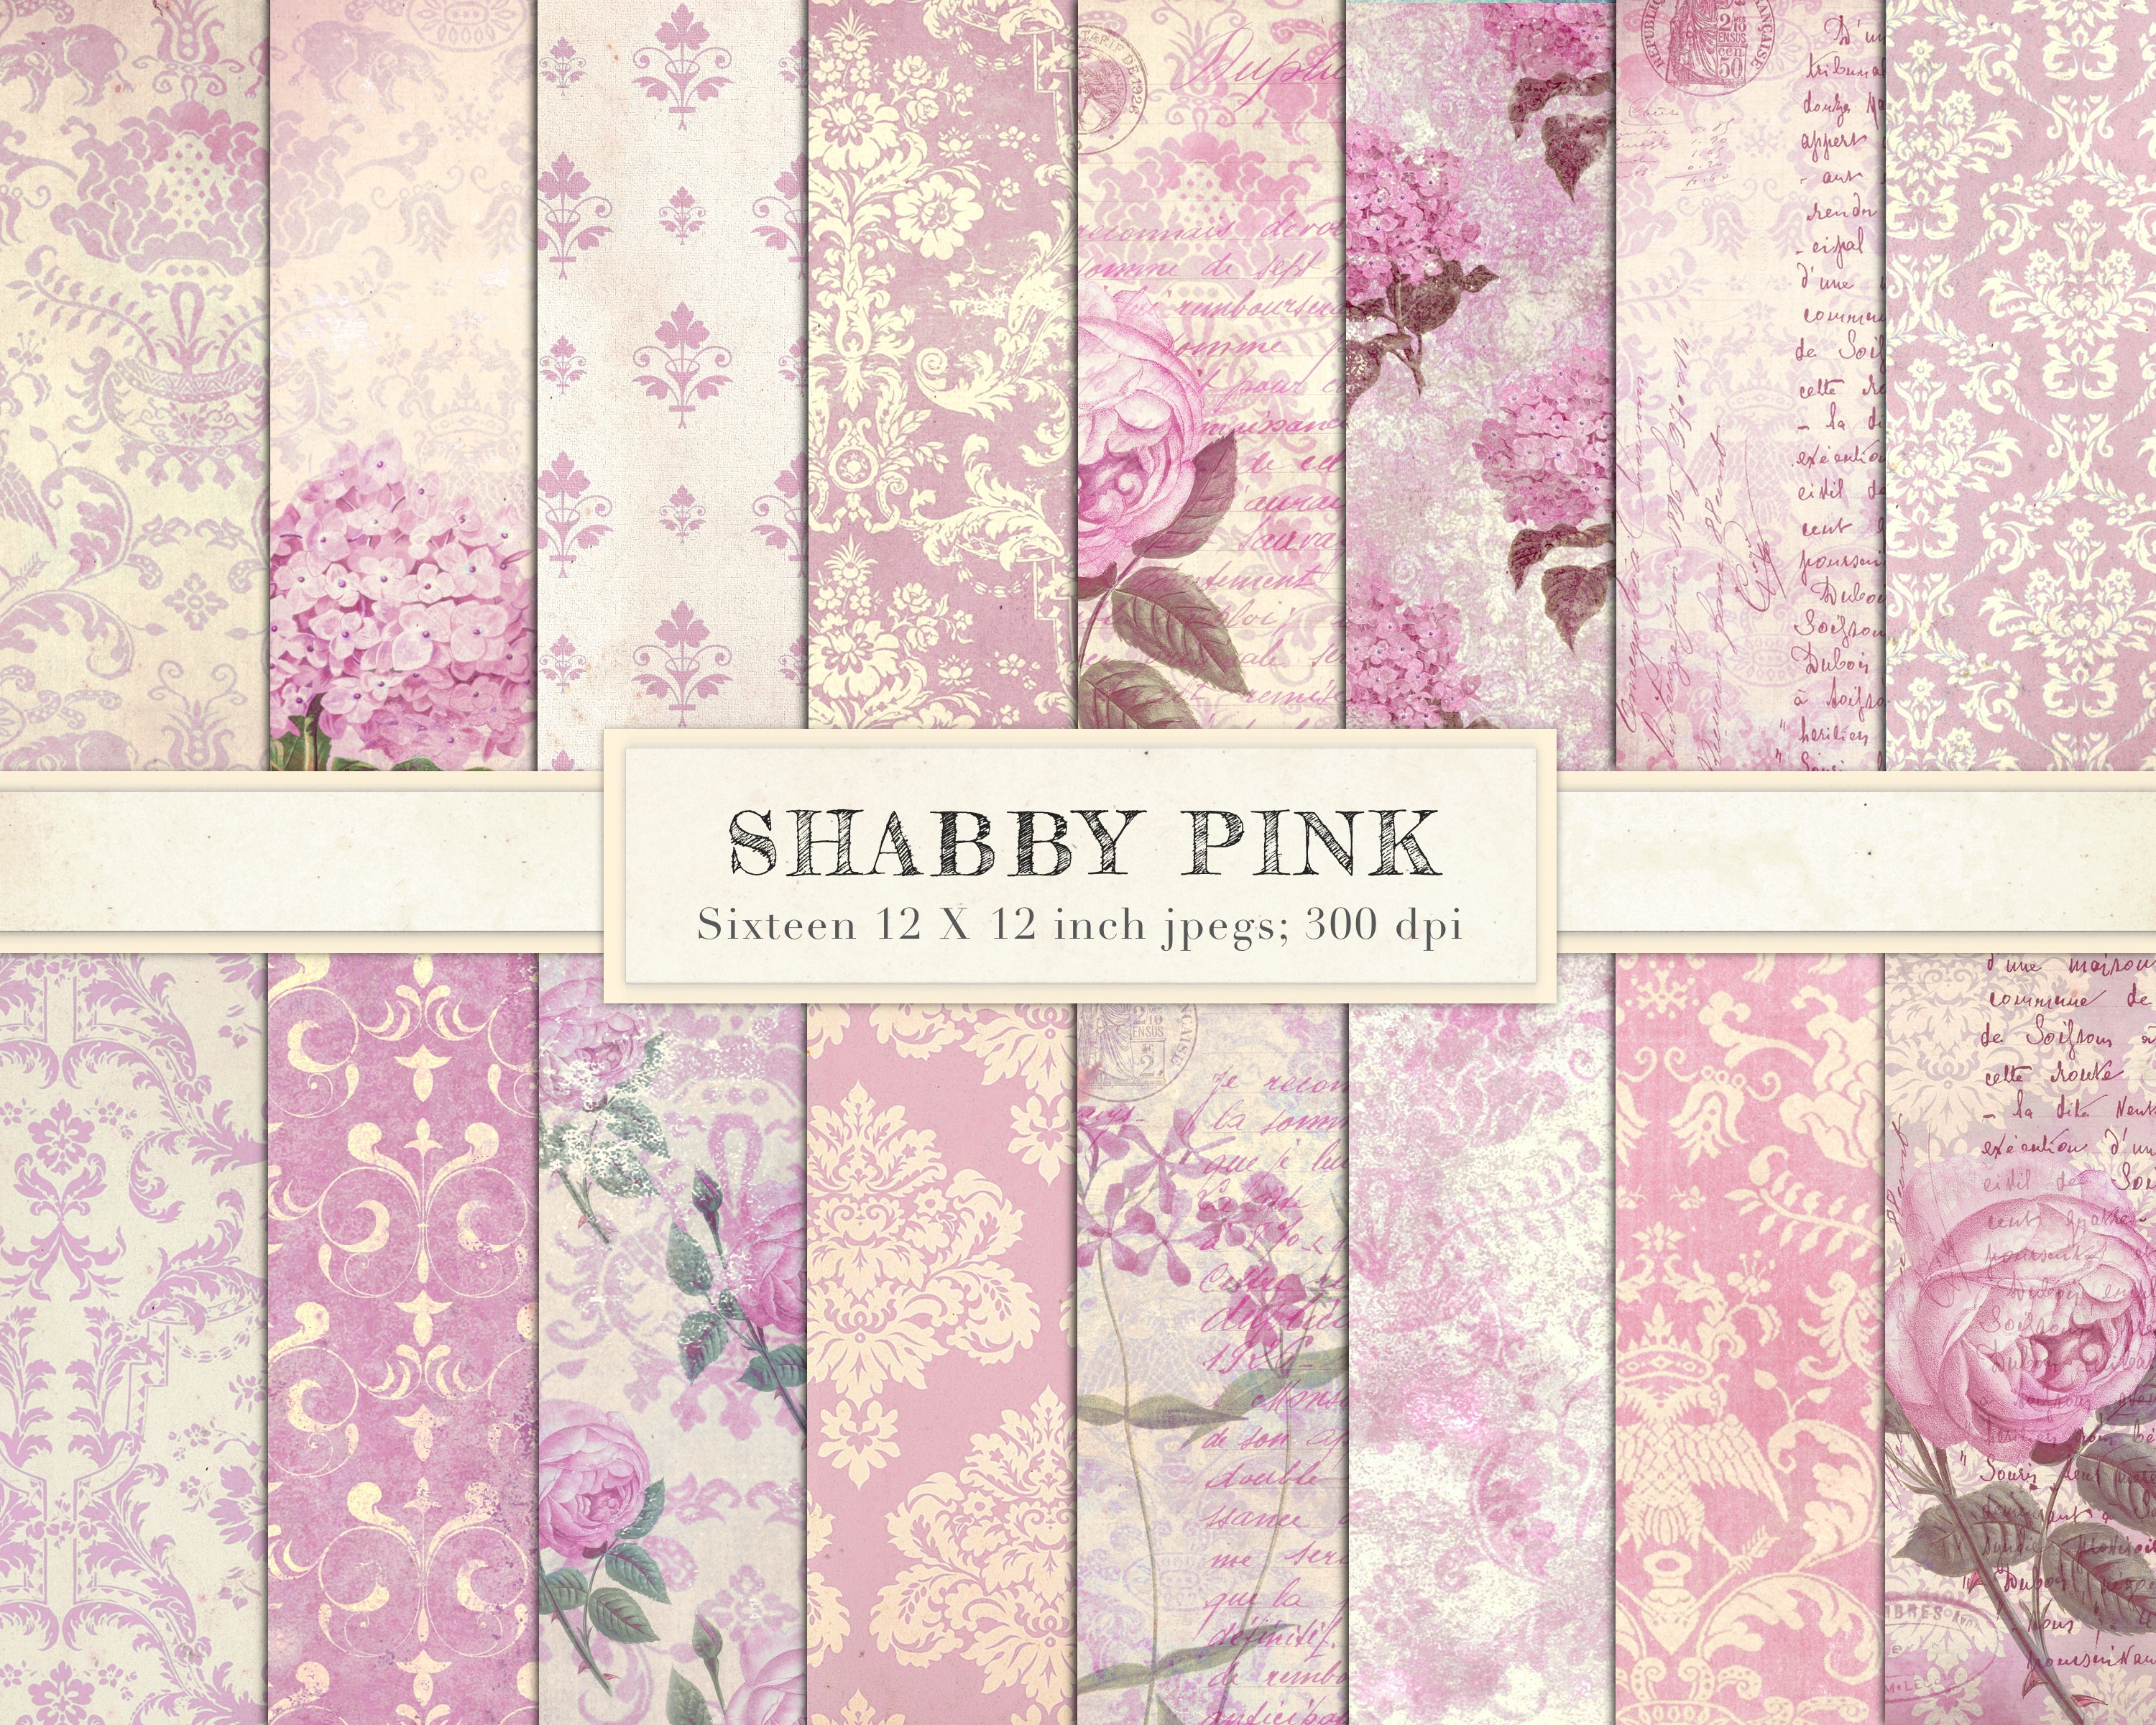 Pink Ephemera, Digital Paper, Vintage Pink, Scrapbook Paper, Junk Journal,  Damask, Botanical, Roses, Hydrangea, Shabby Chic, Pink, DOWNLOAD 